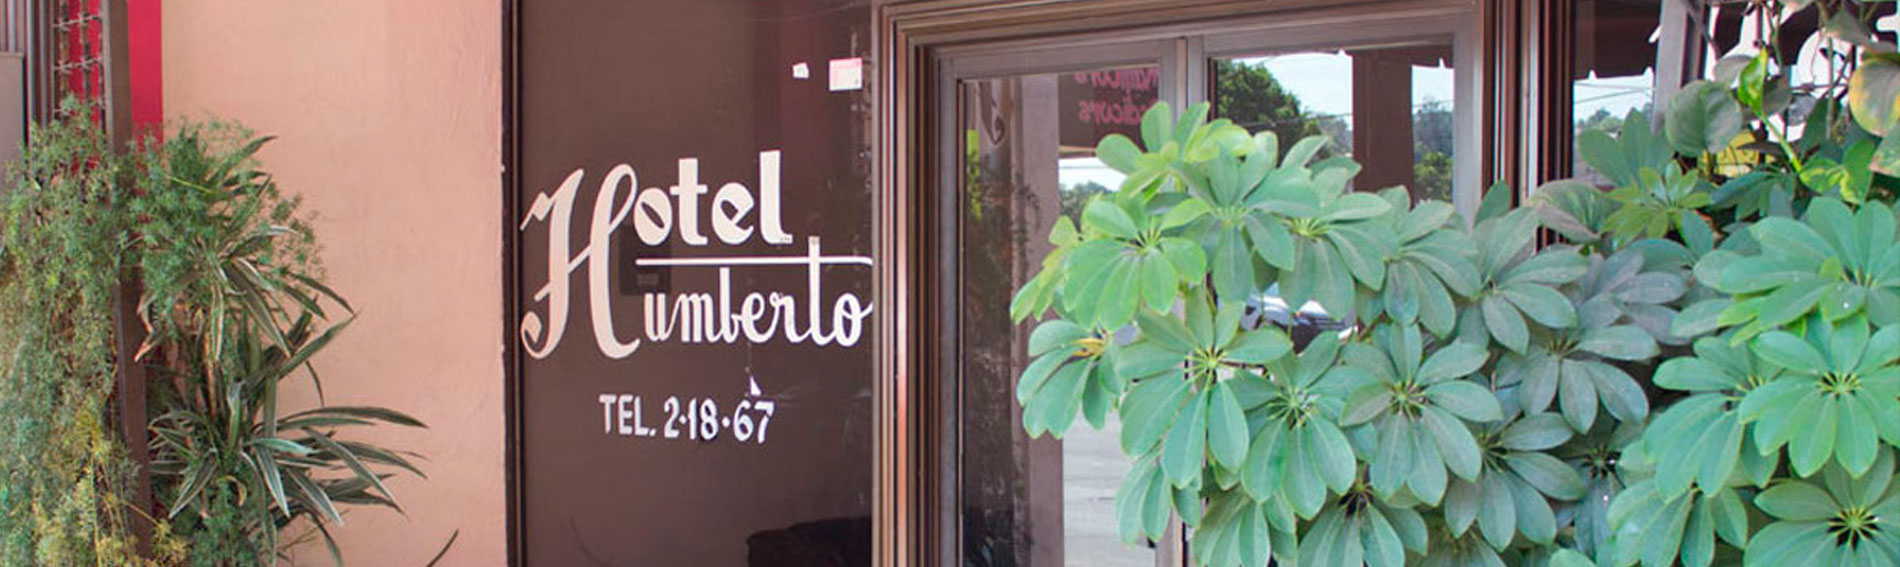 Hotel Humberto Tepic, Nayarit México